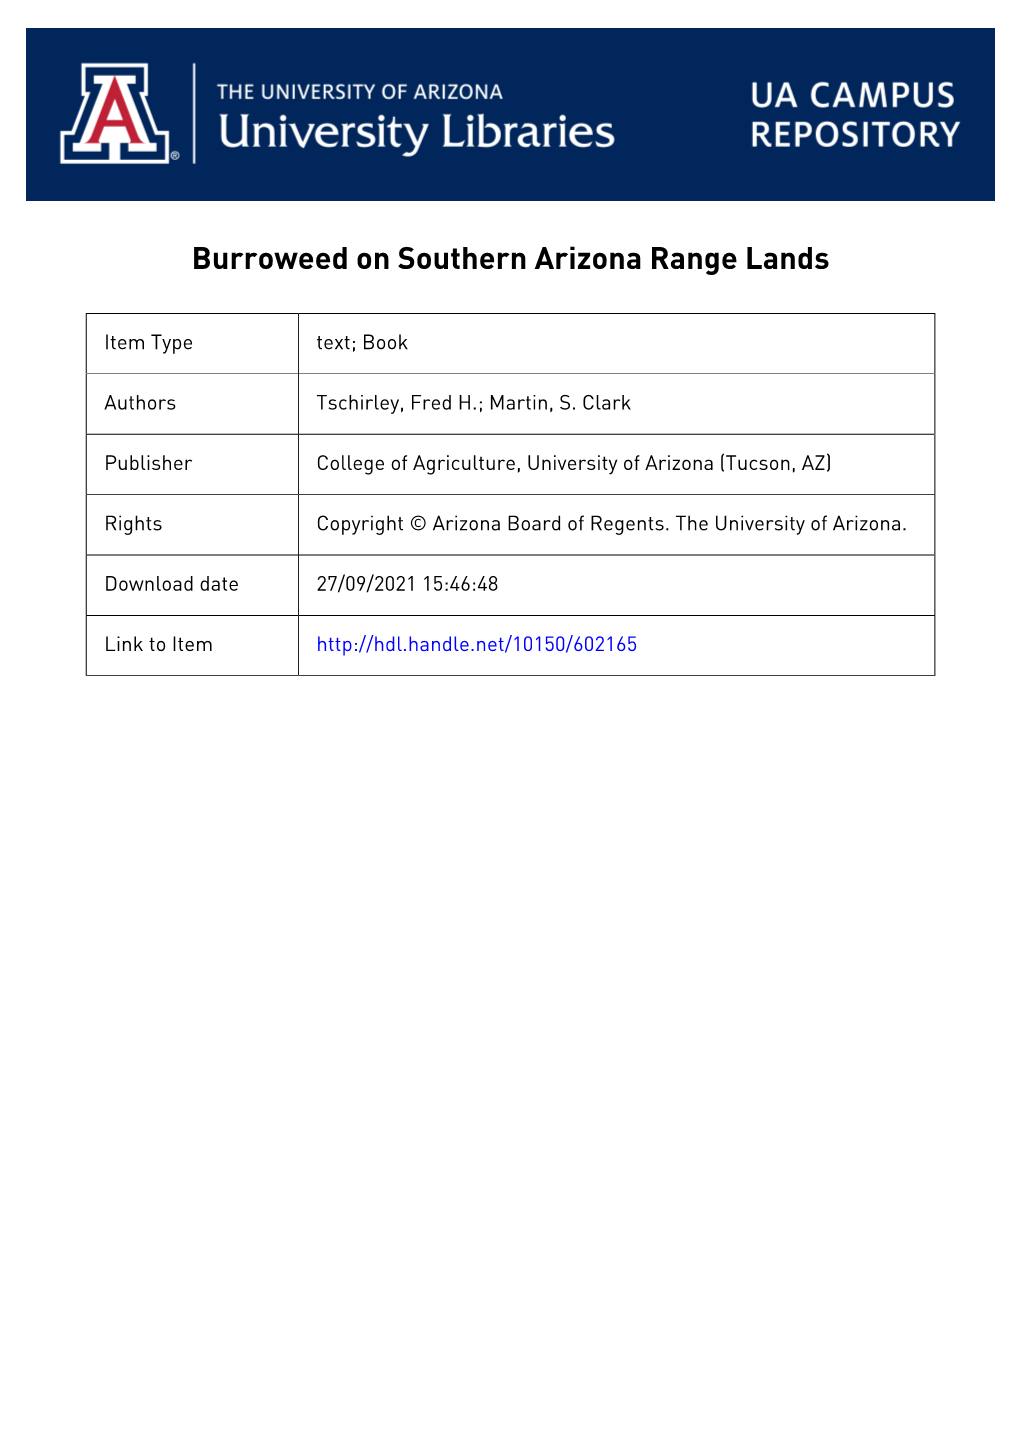 Burroweed on Southern Arizona Range Lands